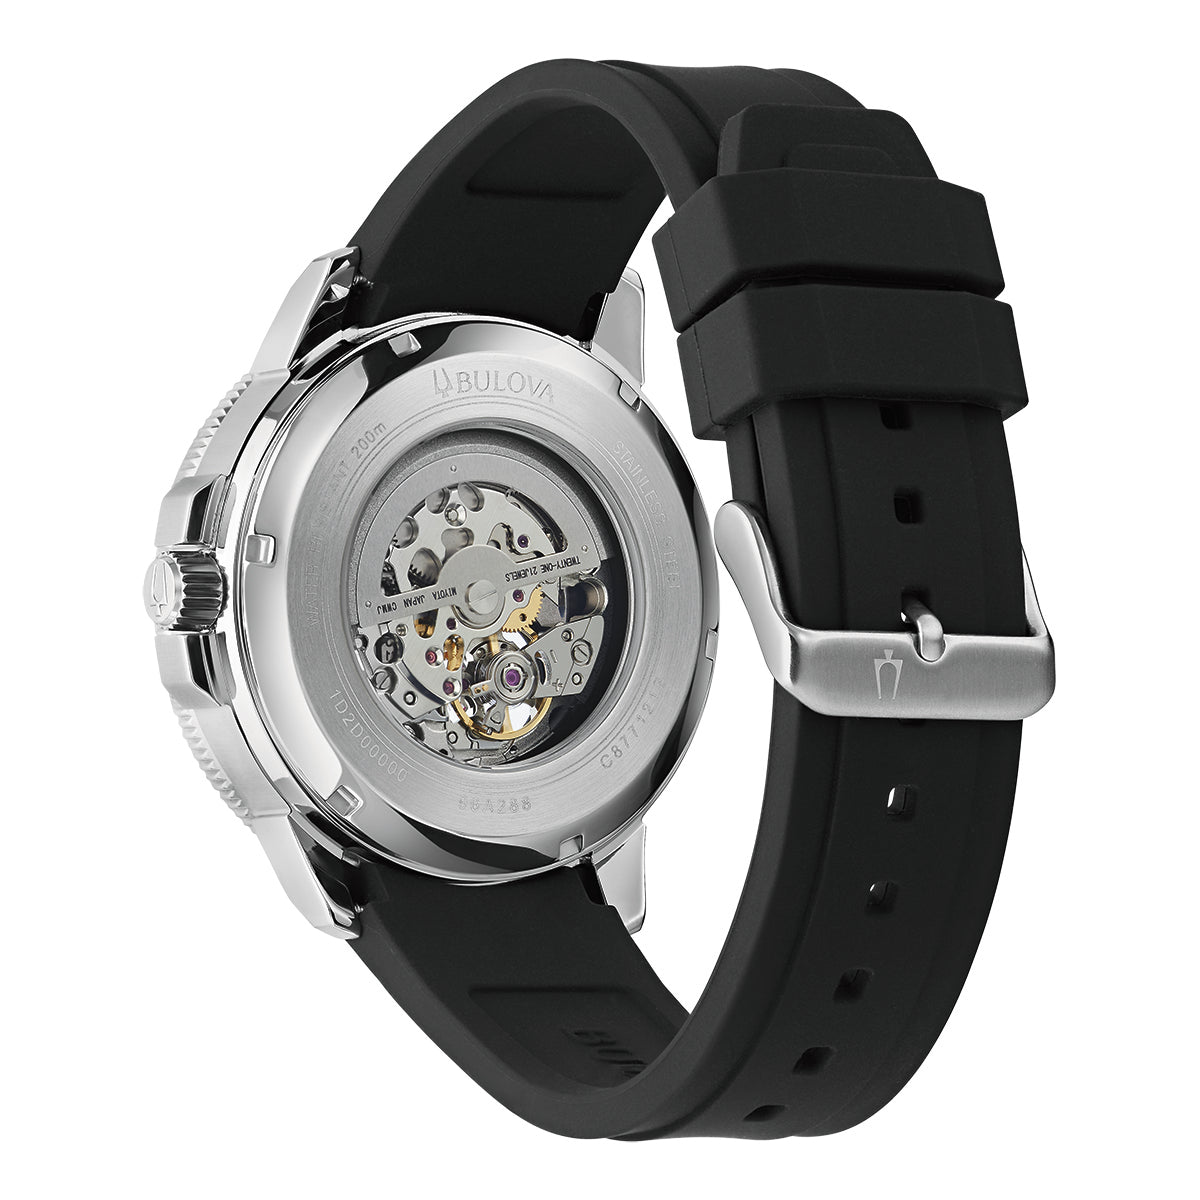 Bulova Men's Marine Star Automatic Watch 96A288